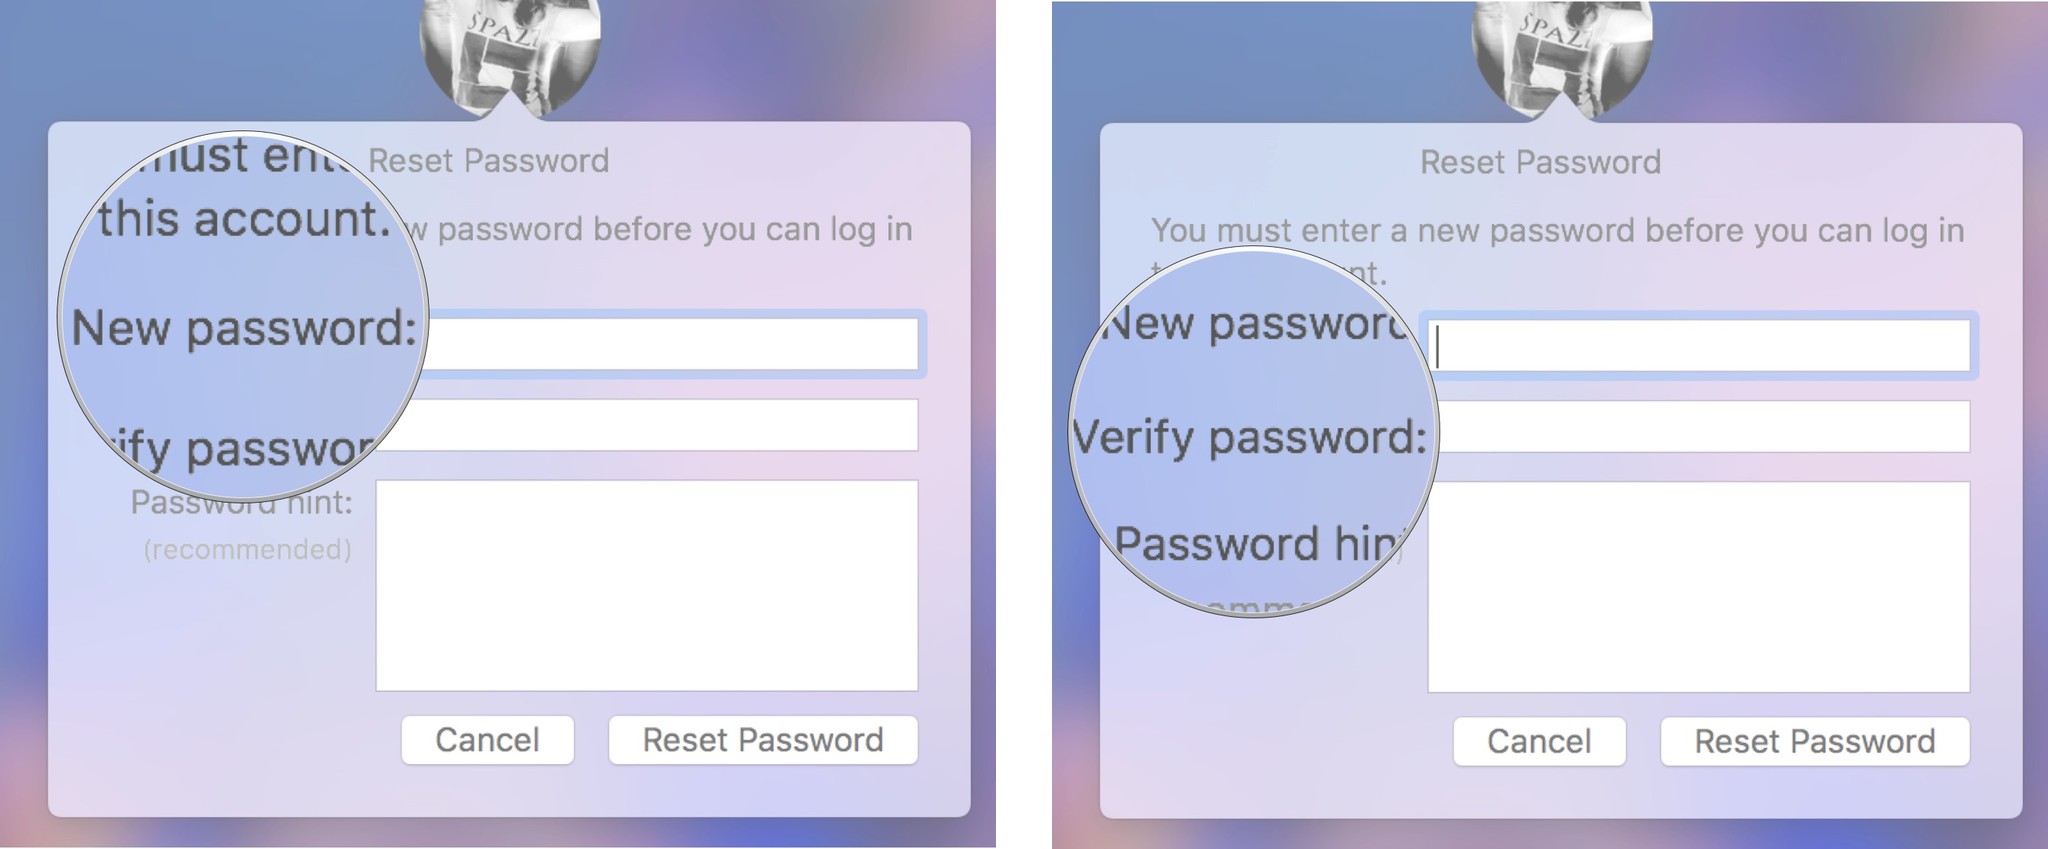 Enter the new password, then enter it again